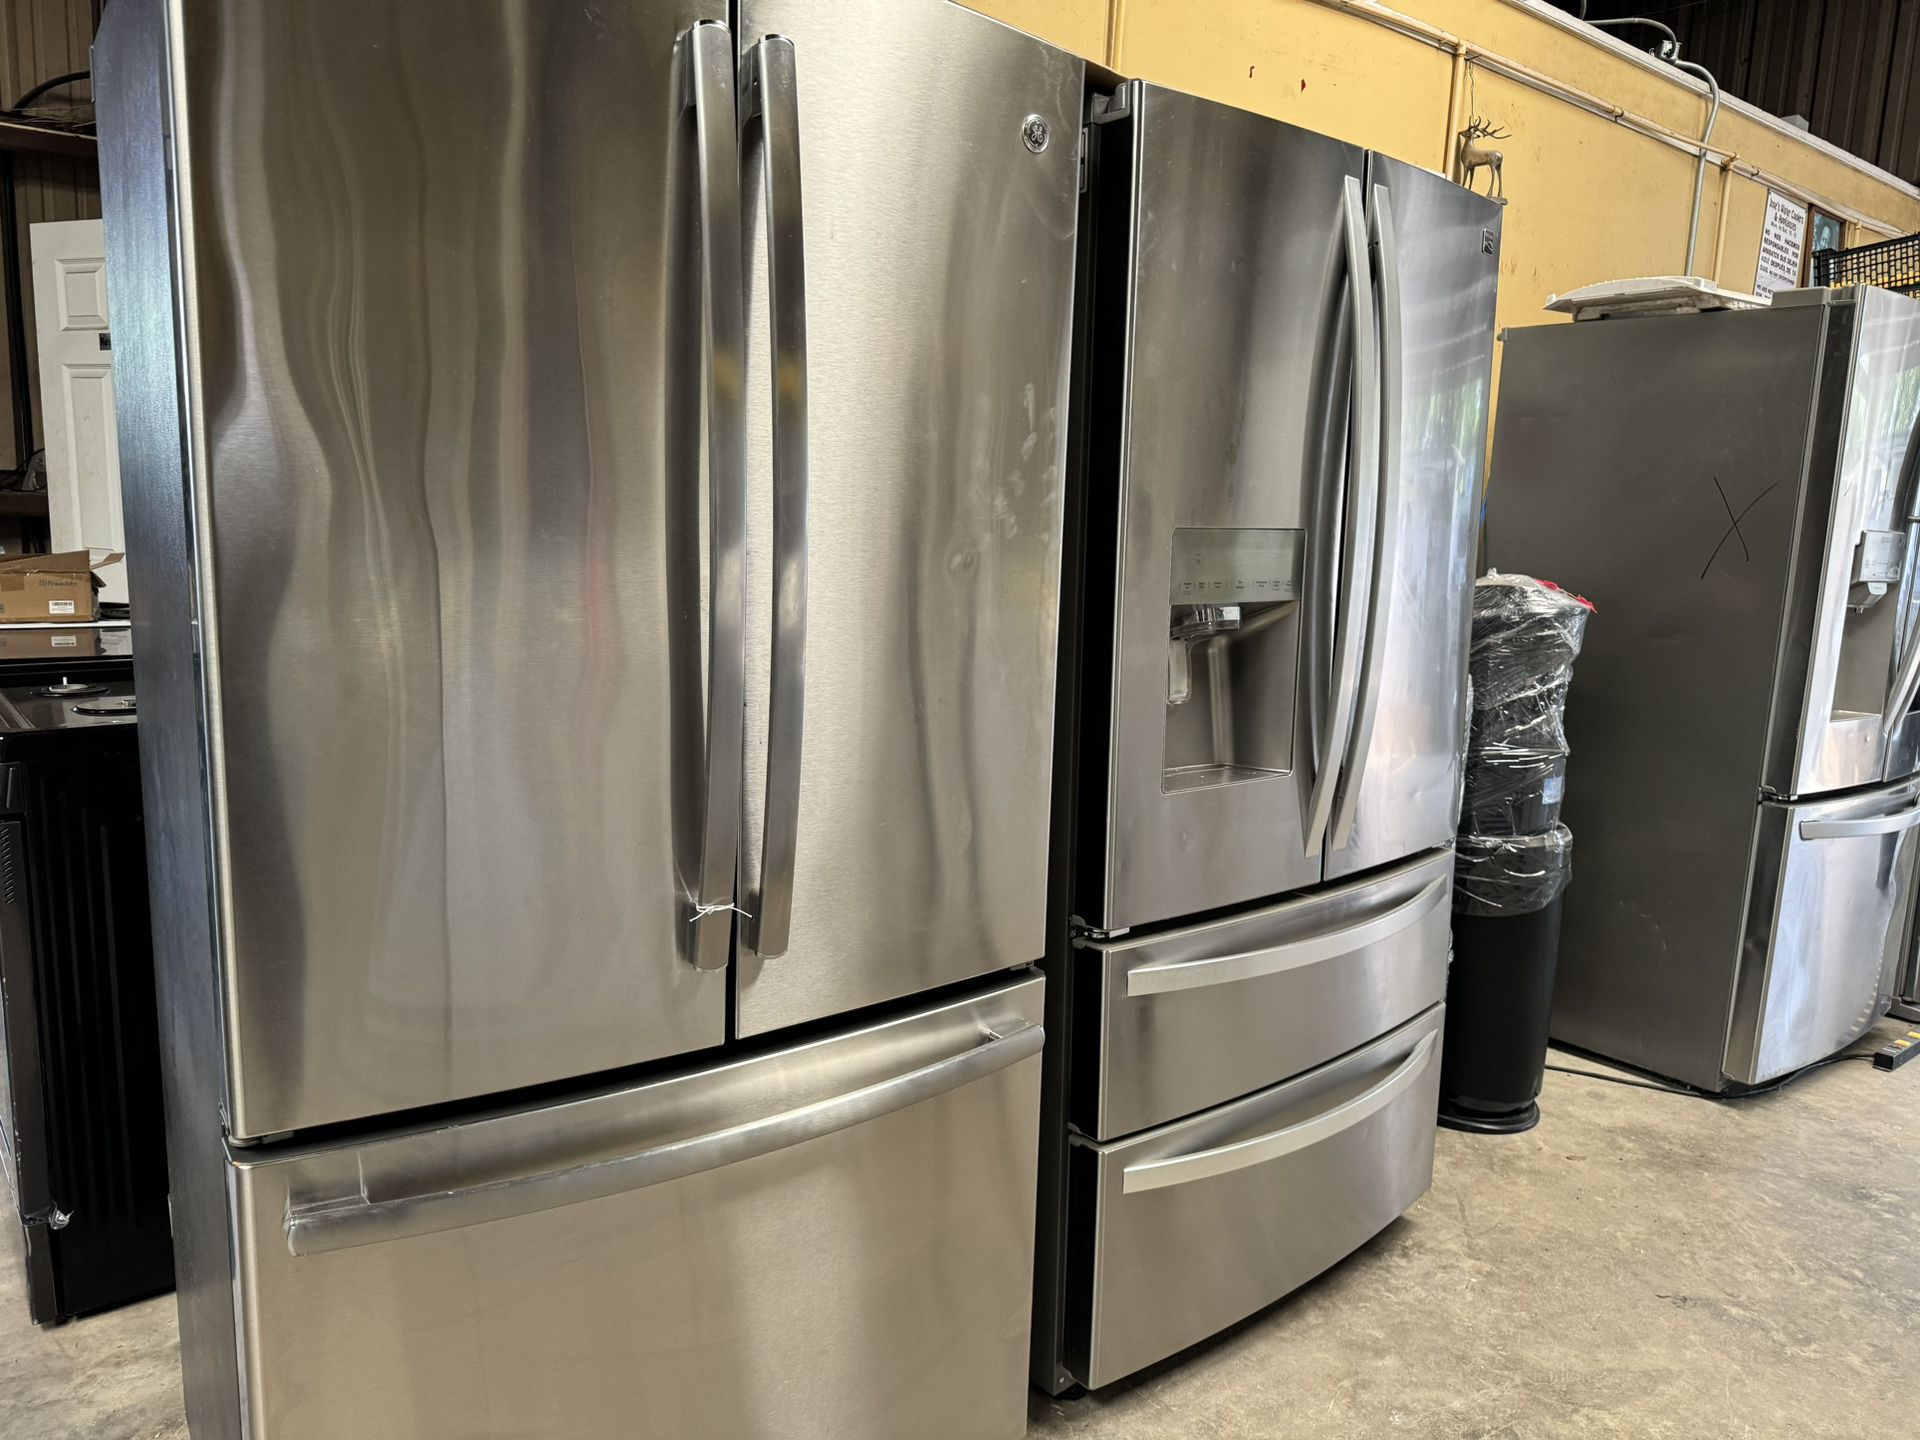 French Door Refrigerator Starting At $400